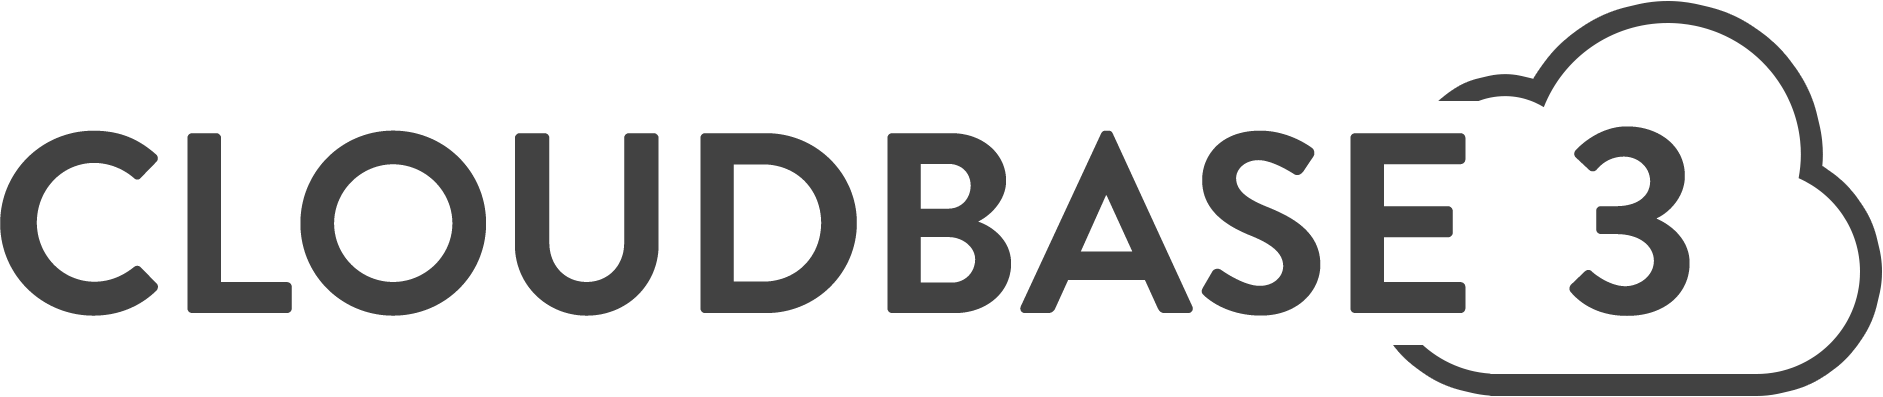 cloudbase-3-logo-dark